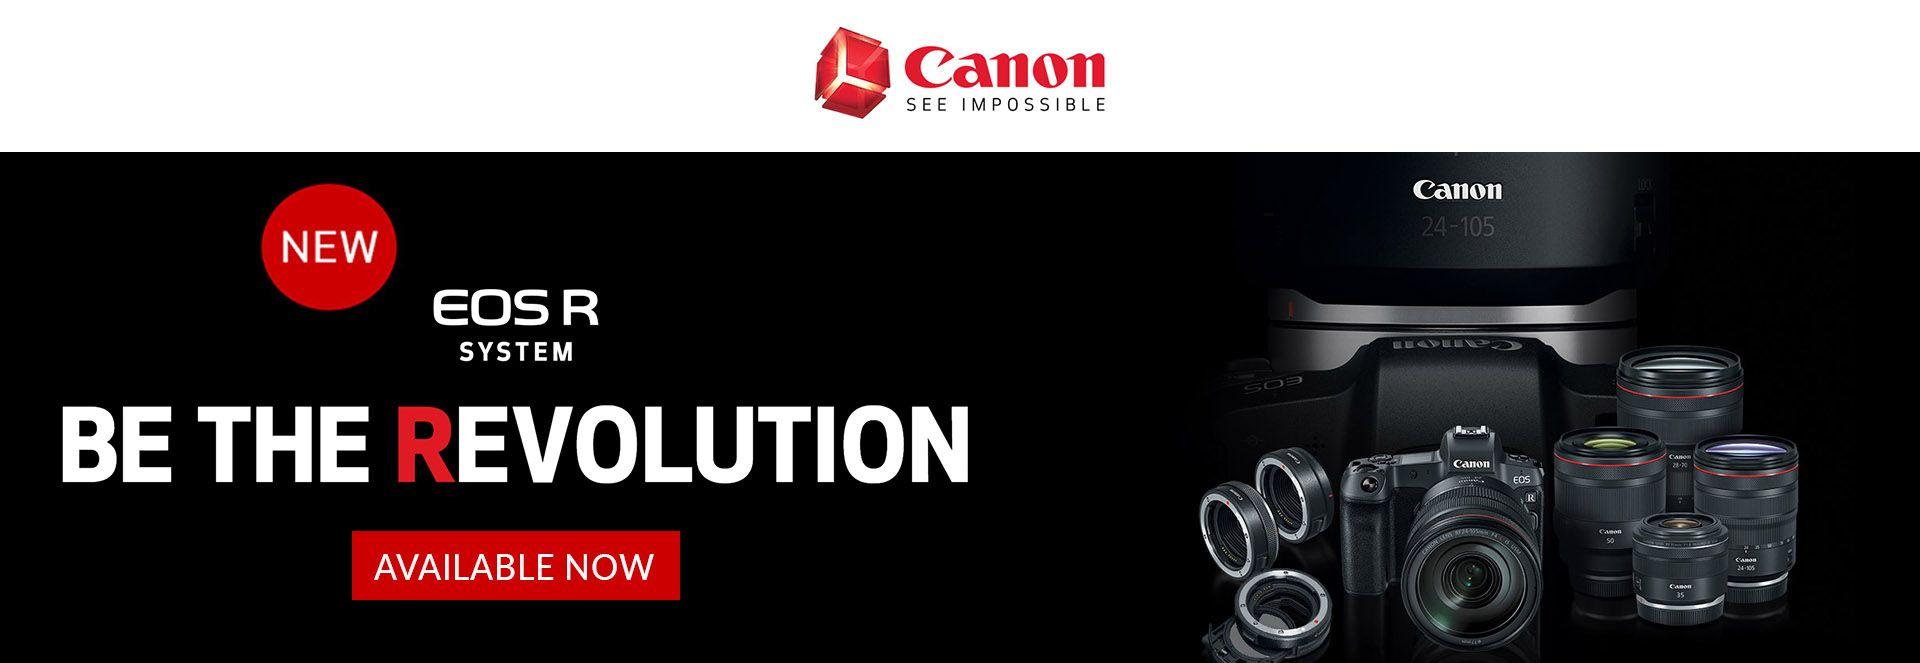 Canon See Impossible Logo - Buy DSLR & Professional Camera Equipment. Camera Shop NY